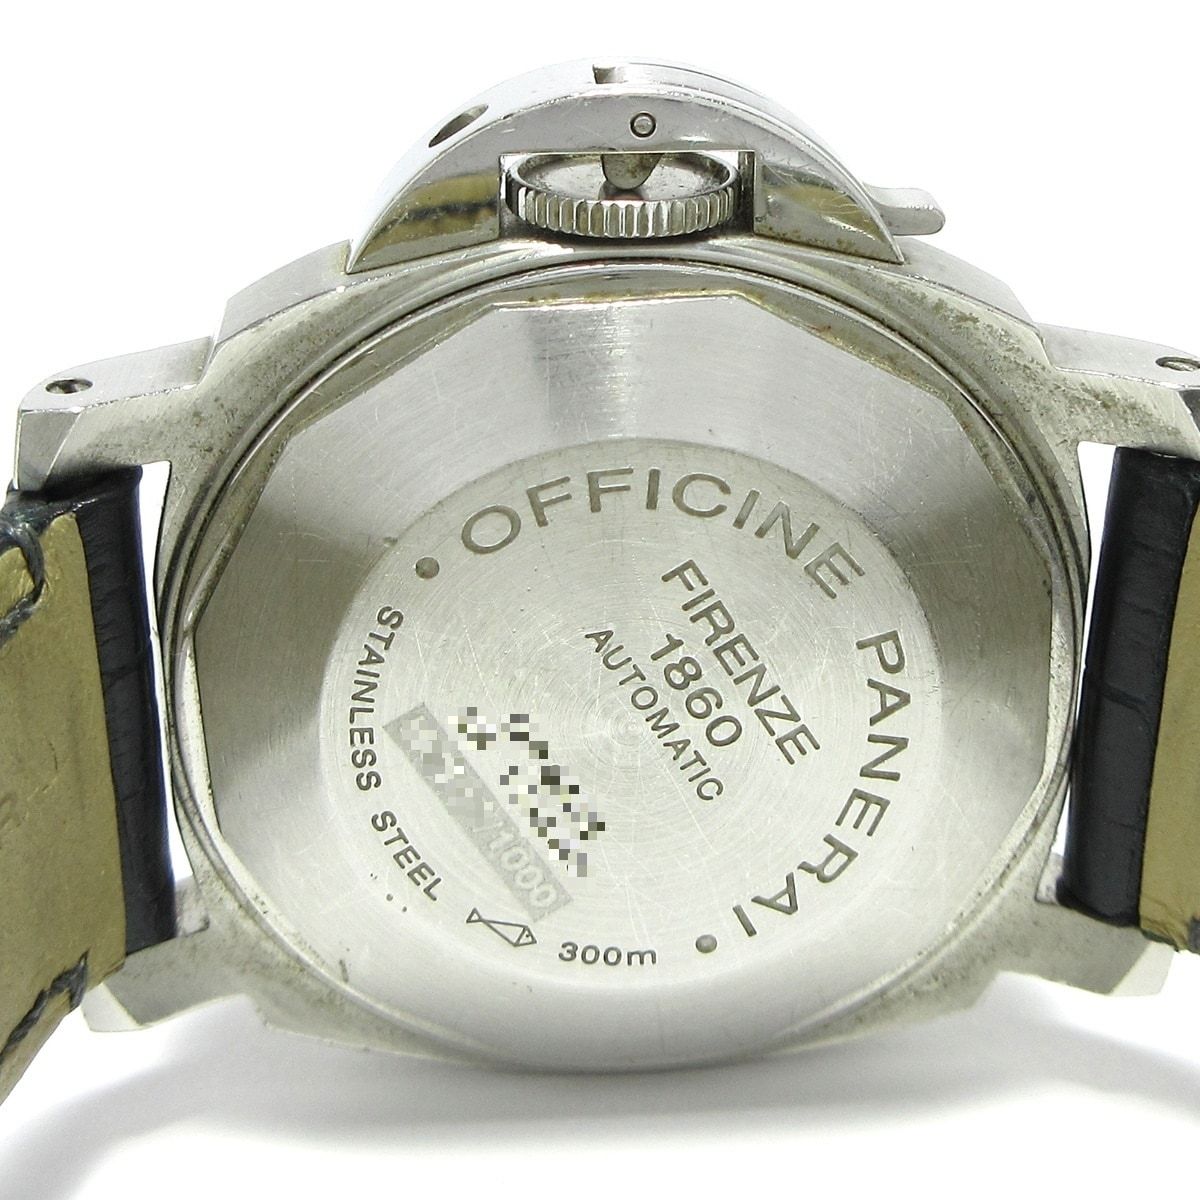 PANERAI(パネライ) 腕時計 ルミノール マリーナ PAM00051 メンズ SS/革ベルト 白 - メルカリ